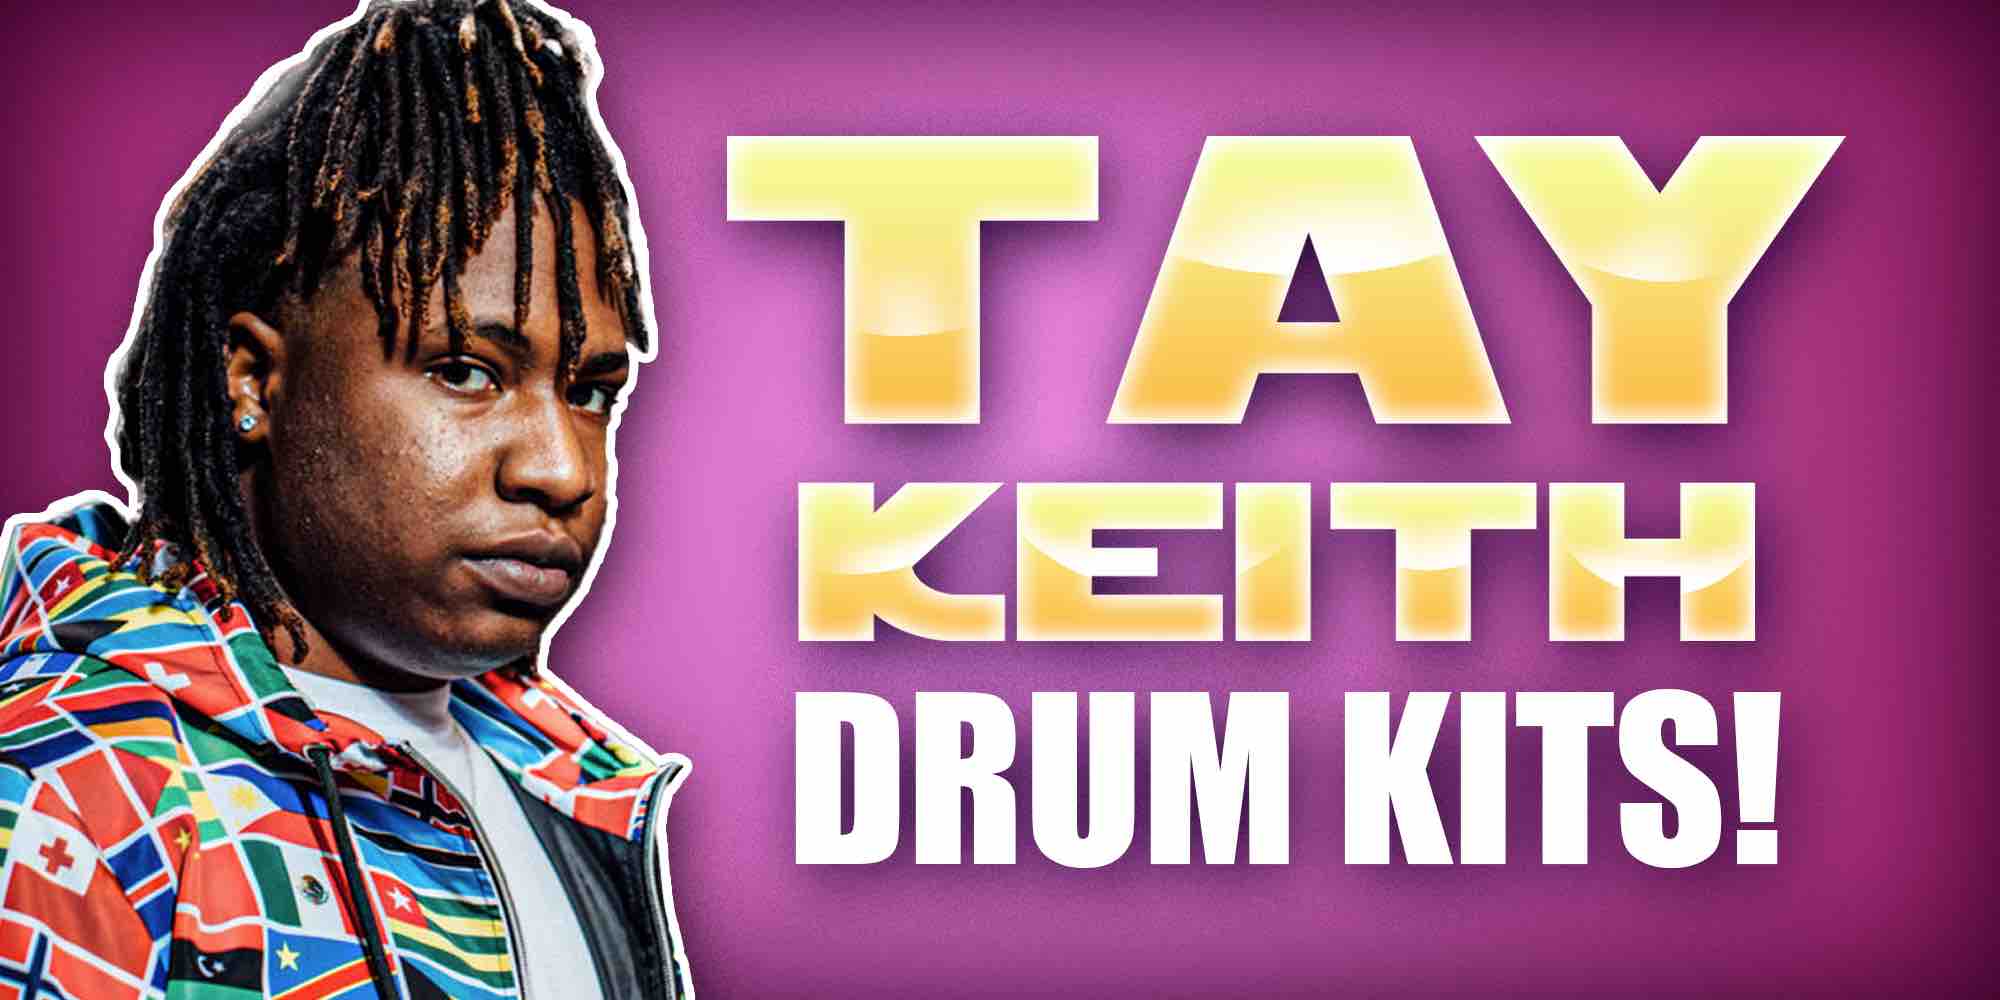 Free Tay Keith Drum Kit